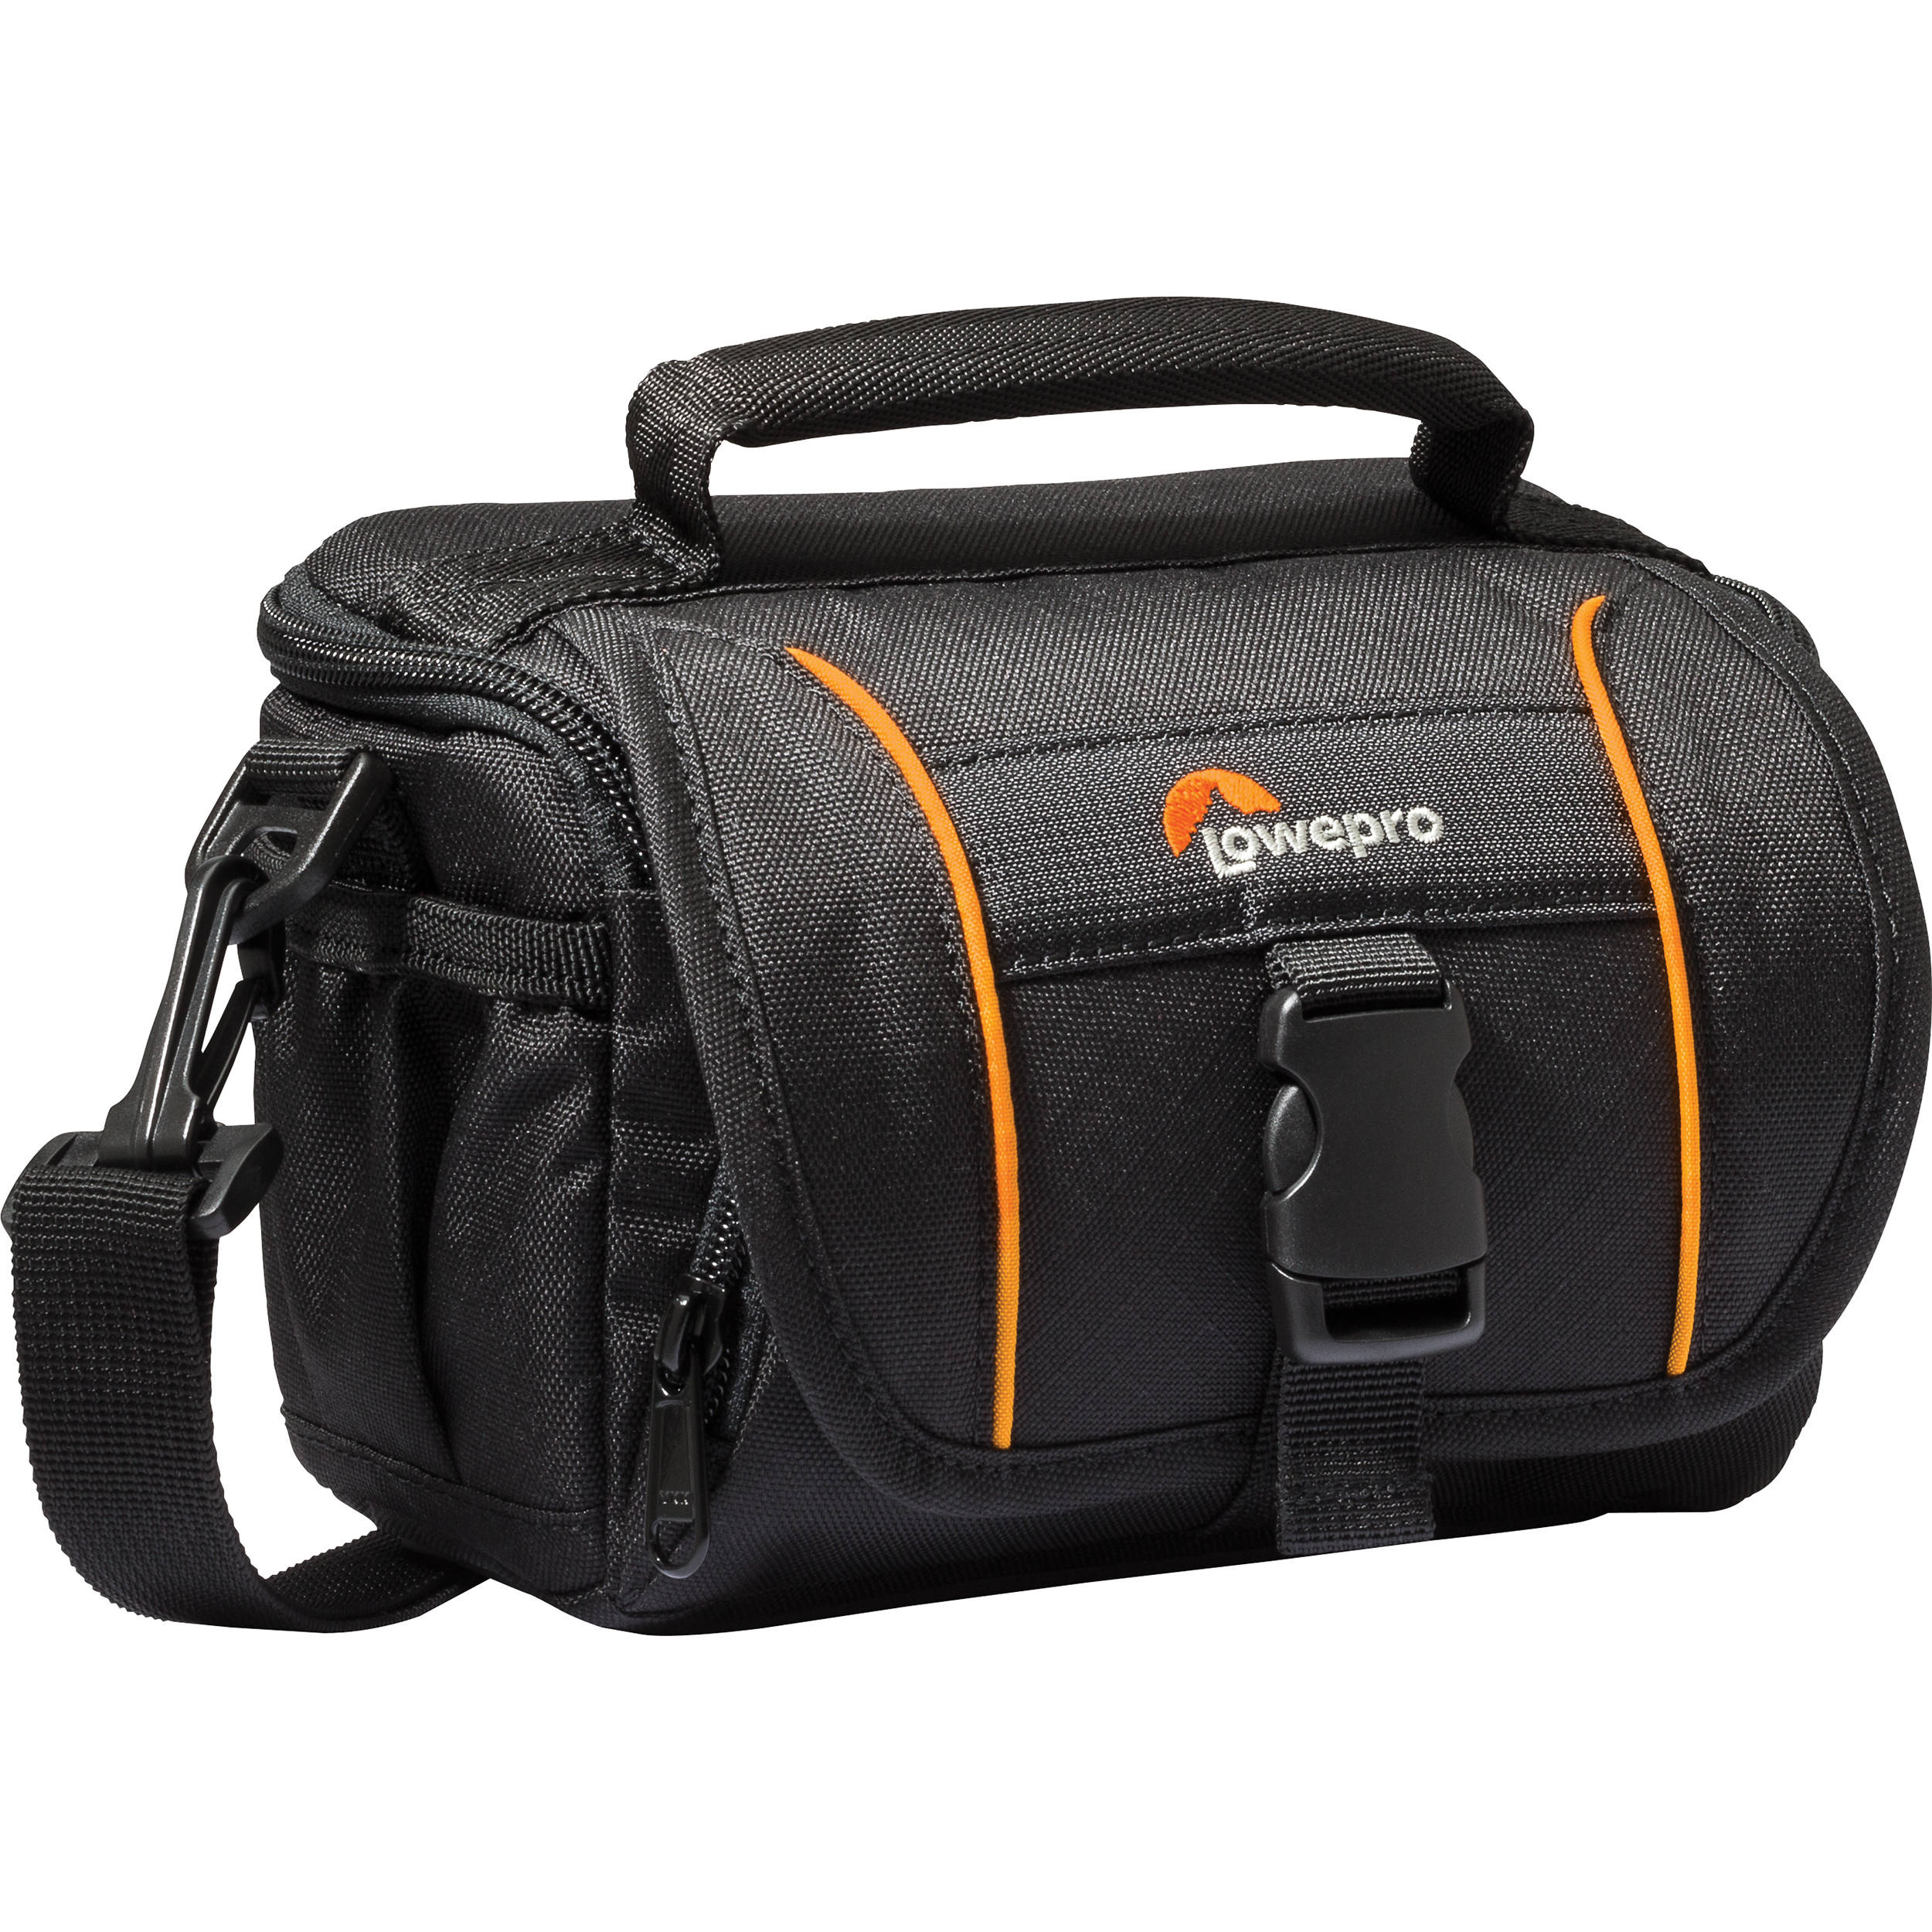 Lowepro Adventura SH 110 II Shoulder Bag (Black)